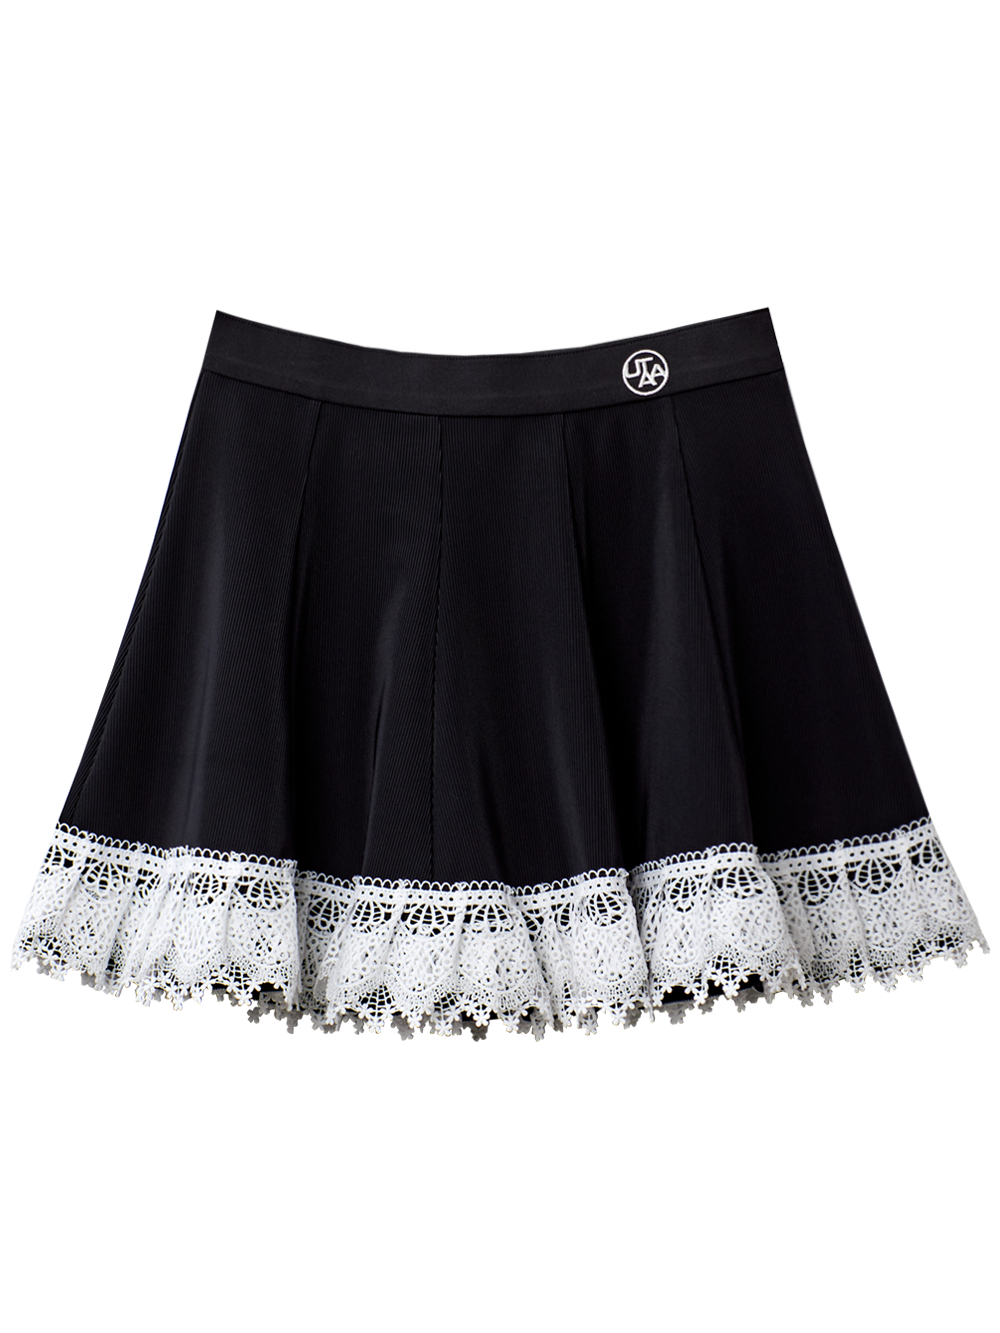 UTAA Notredame Ribbon Lace Flare Skirt : Black (UB4SSF409BK)